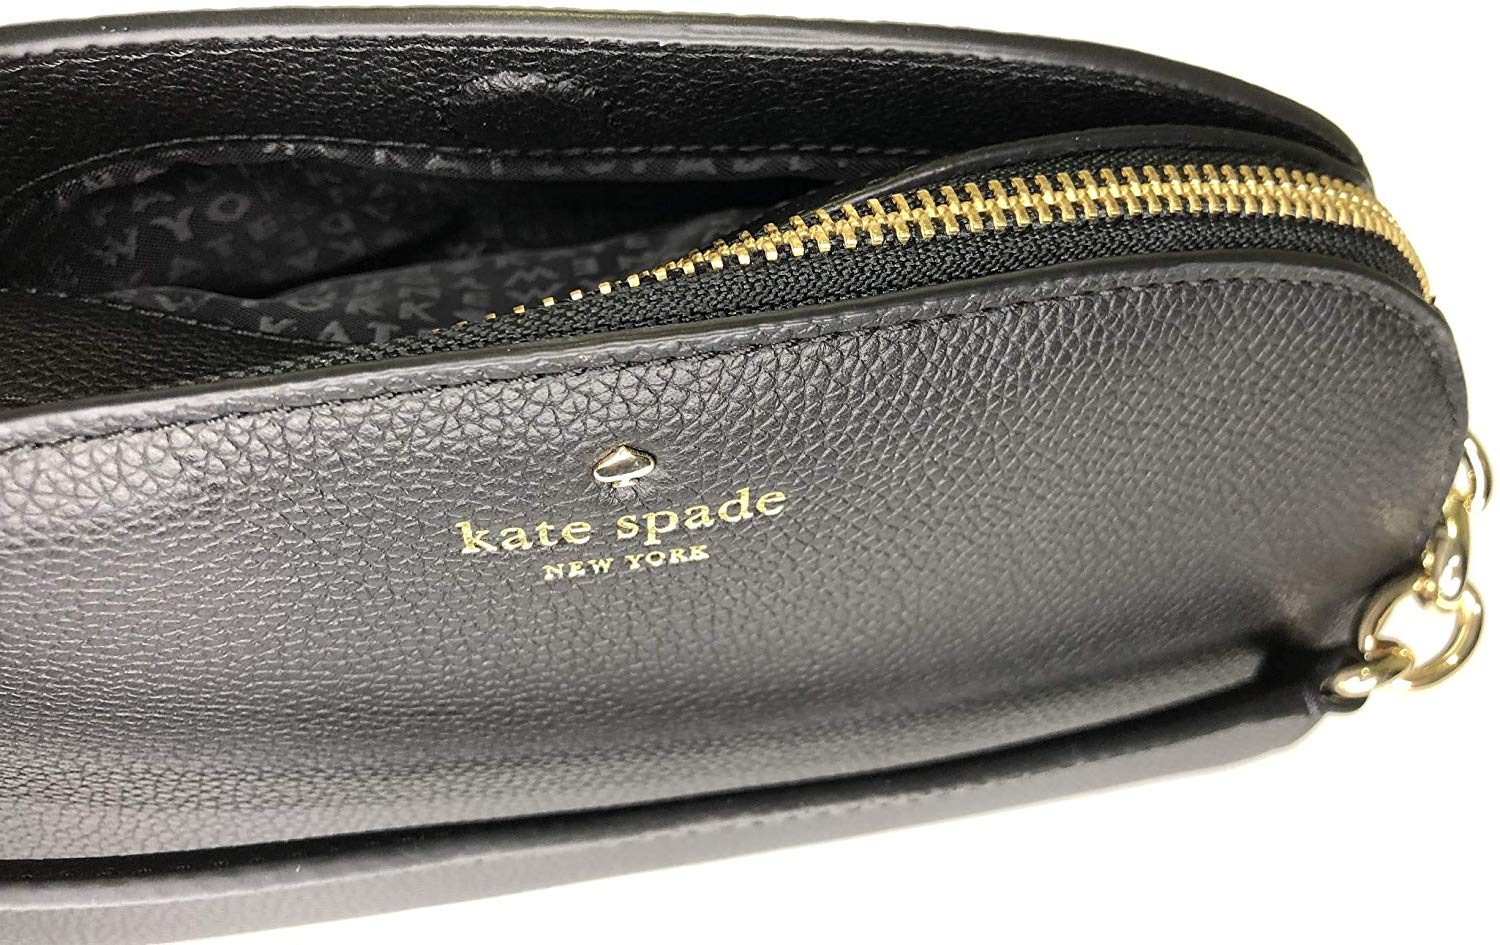 Kate Spade Crossbody Bag With Gift Bag Larchmont Avenue Tori Dome Black # WKRU5765